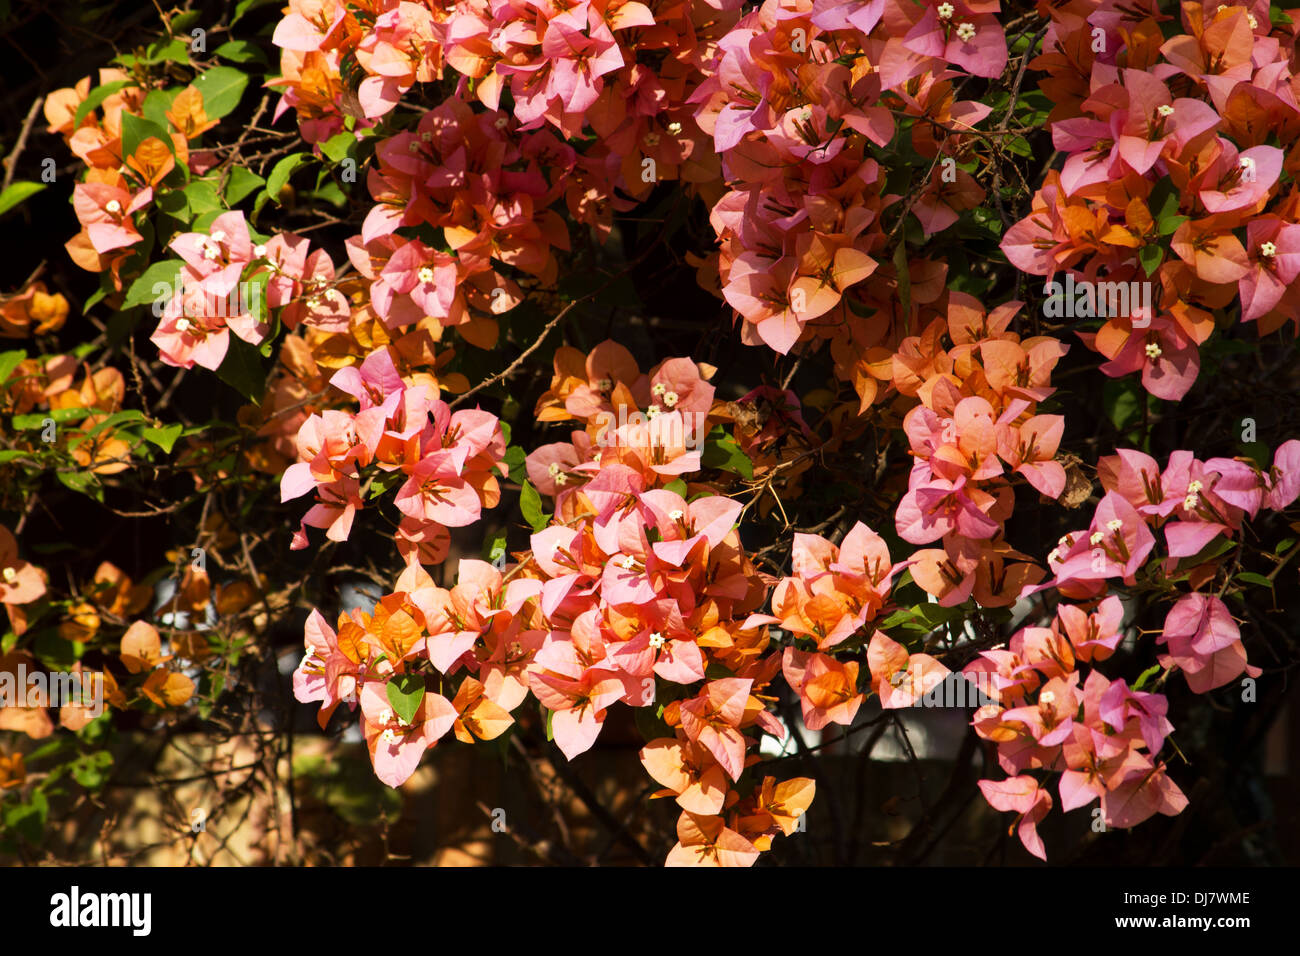 Bougainvillea plant in bloom Stock Photo